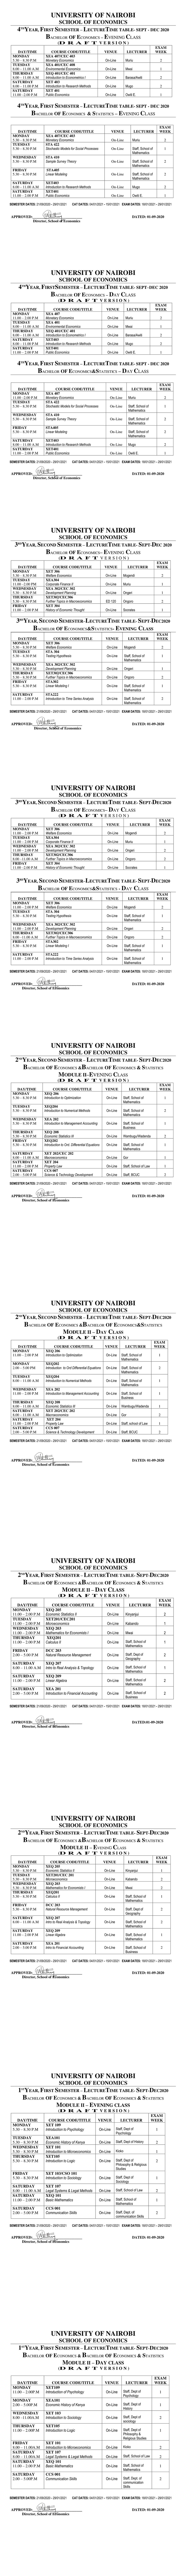 Economics-Module II - Lecture Timetable -Sept-20-Jan-21